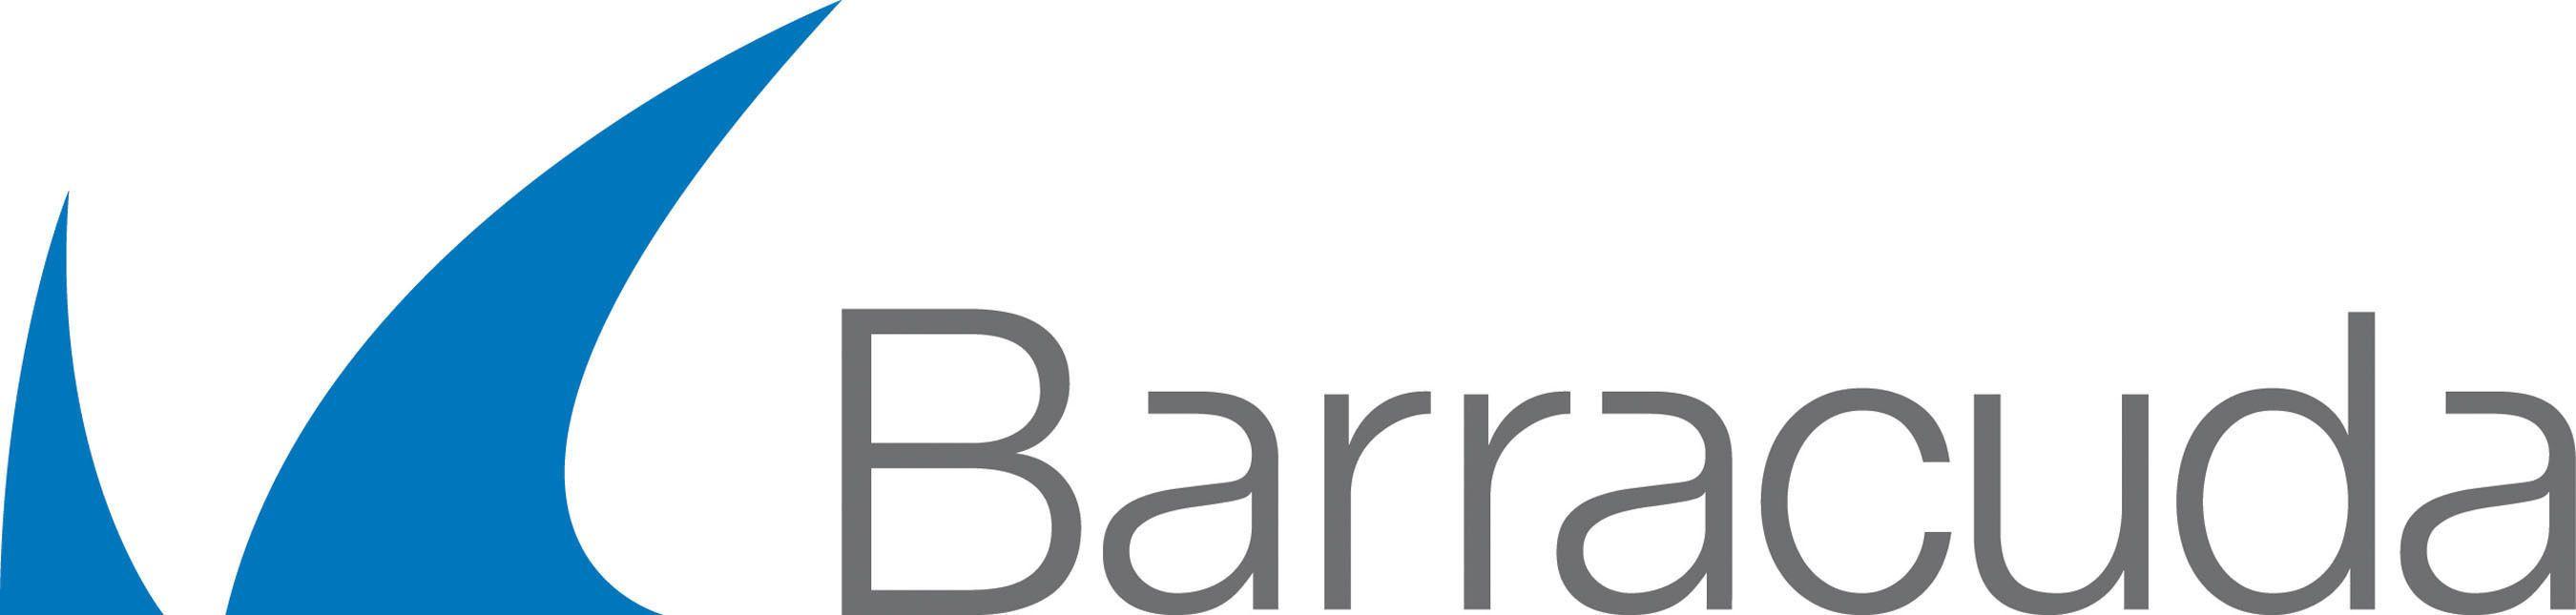 Barracuda Networks Logo - Barracuda-Networks Integration - Dropbox